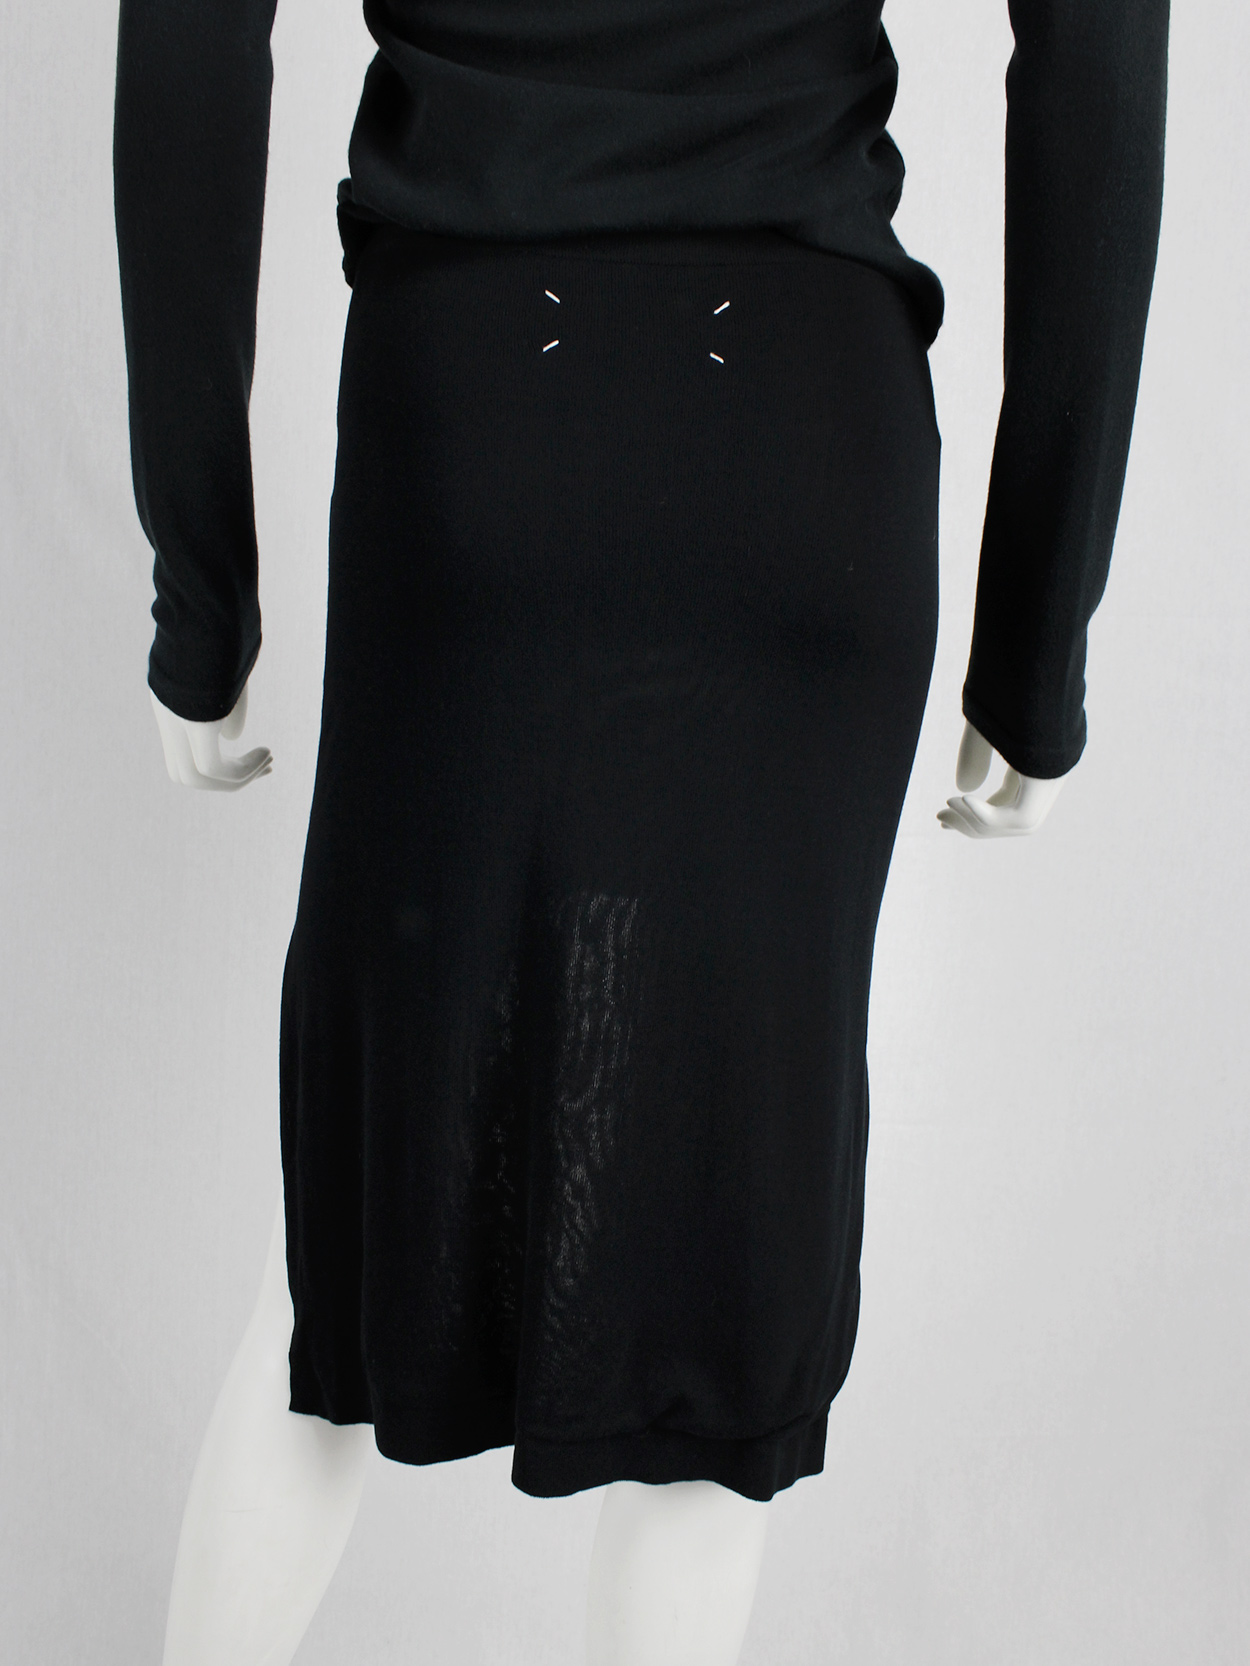 vaniitas Maison Martin Margiela skirt or top with high-low hemline spring 2008 (5)